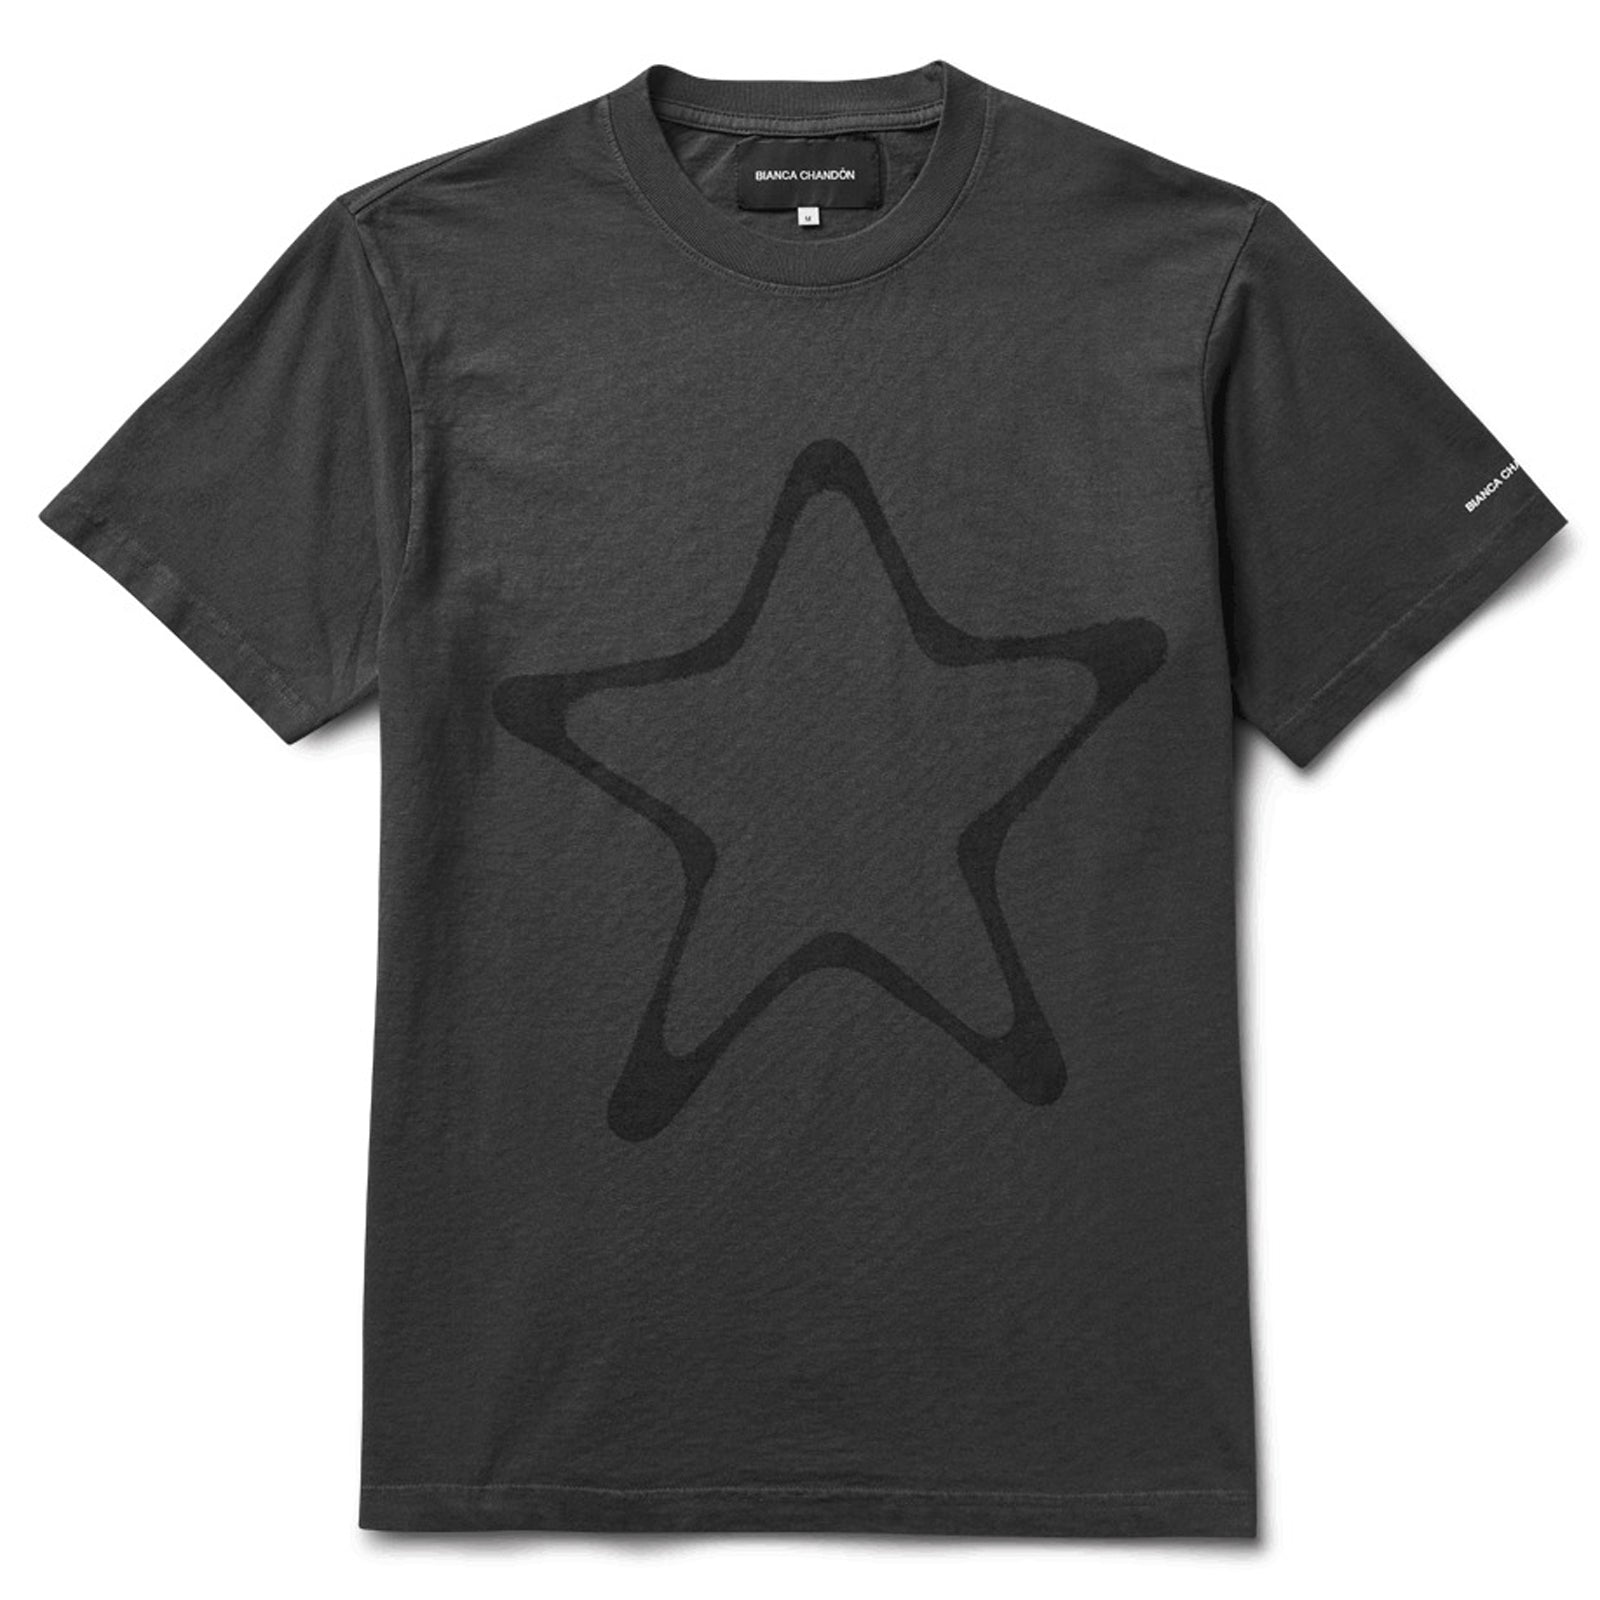 BIANCA CHANDON - Magic Star T-Shirt - (Vintage Black) view 1